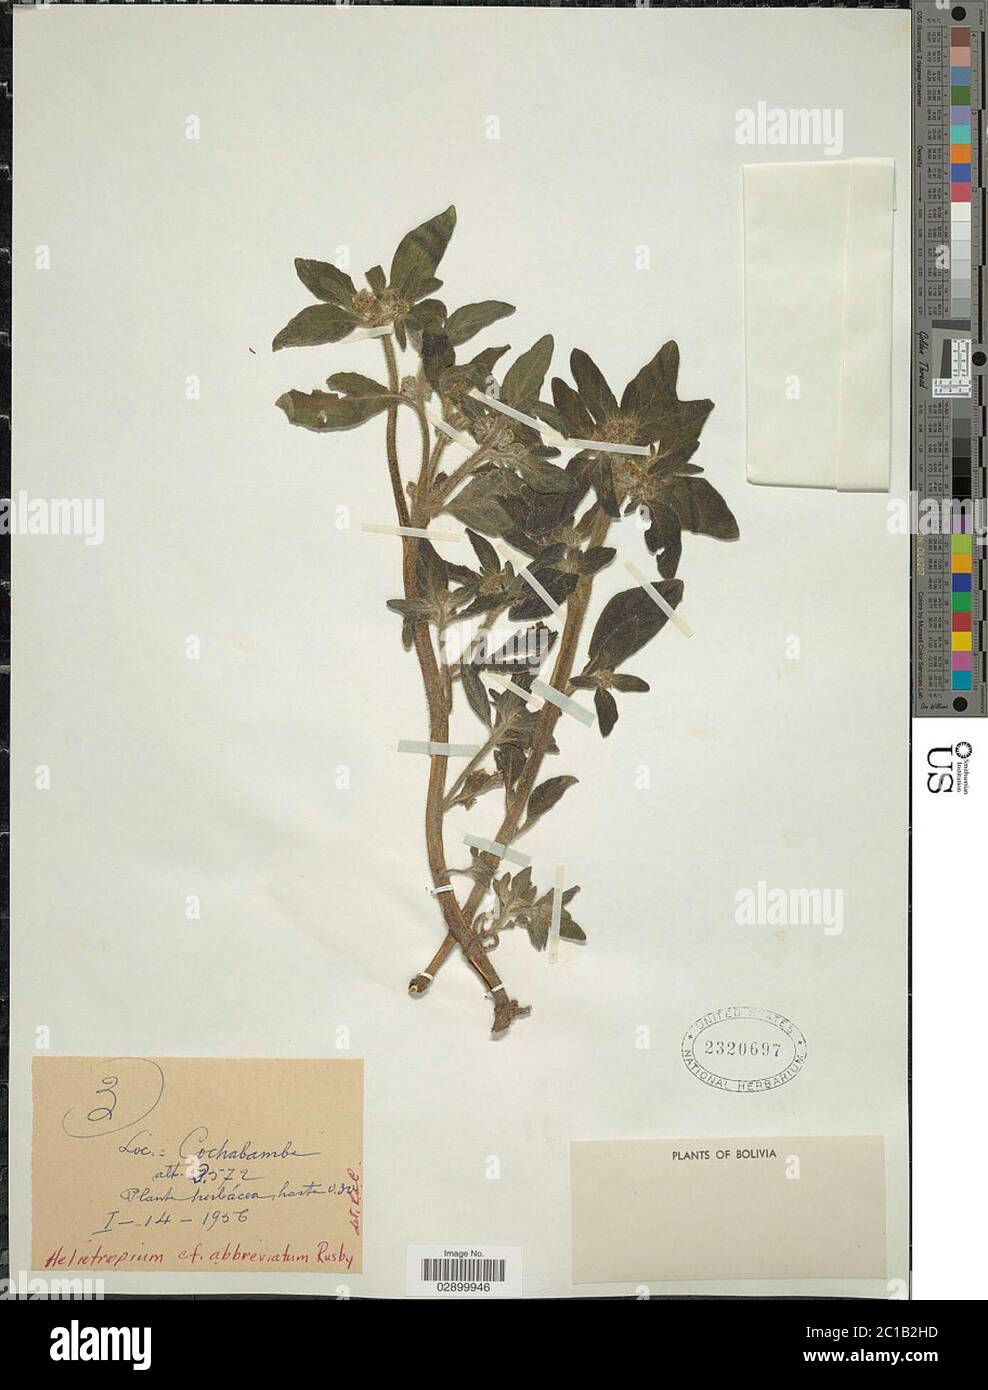 Heliotropium abbreviatum Rusby Heliotropium abbreviatum Rusby. Stock Photo